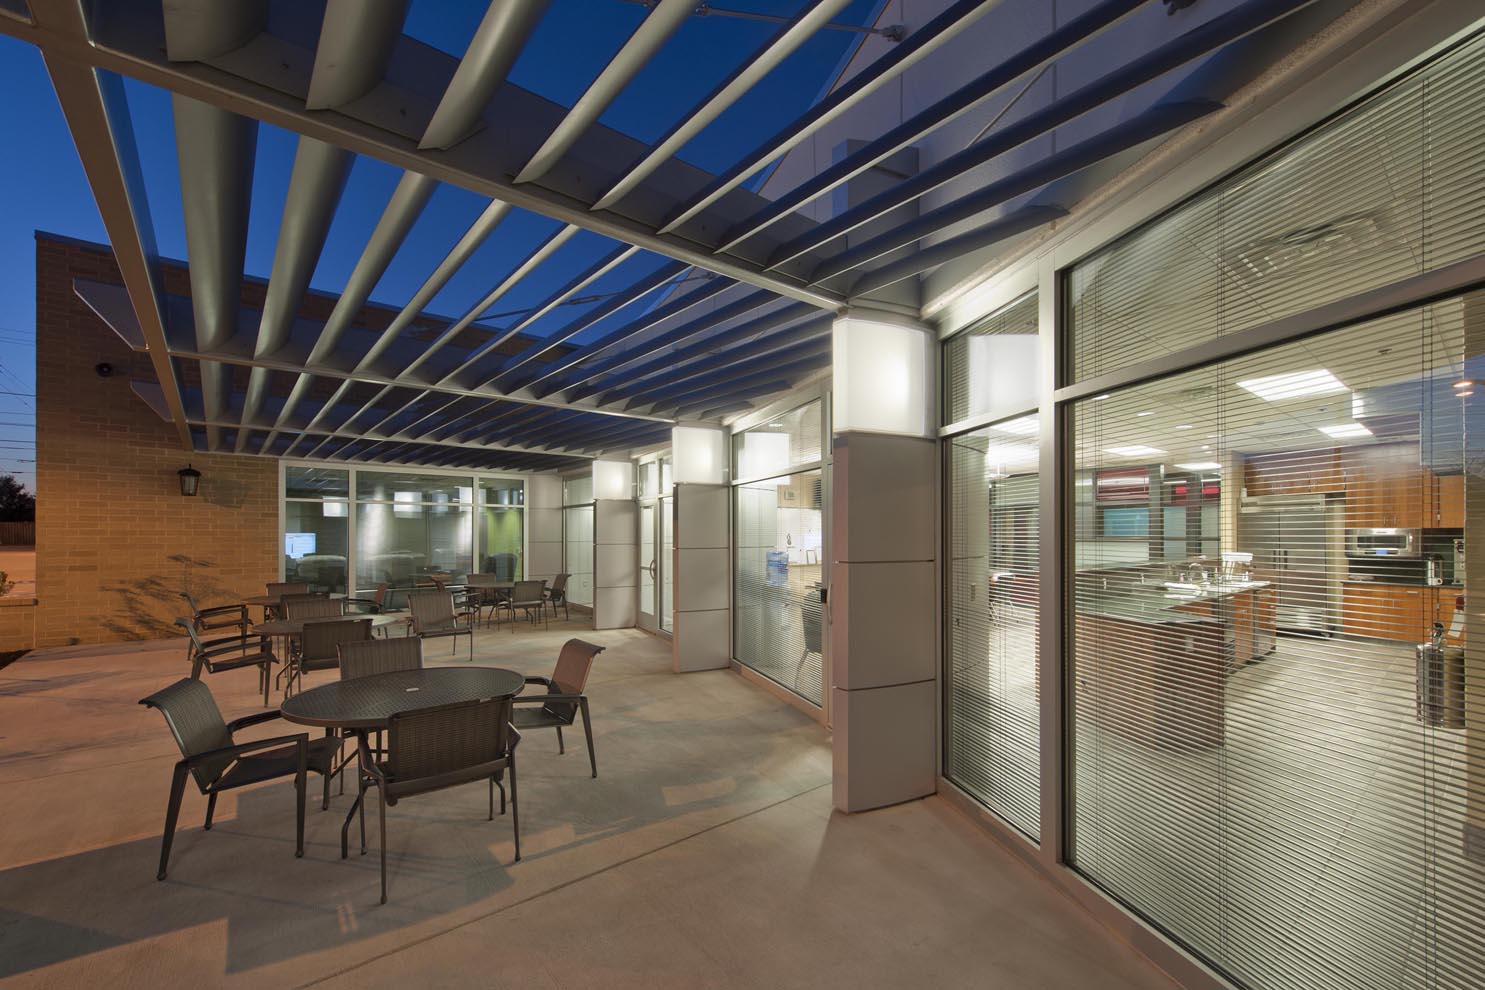 patio with metal trellis overhead